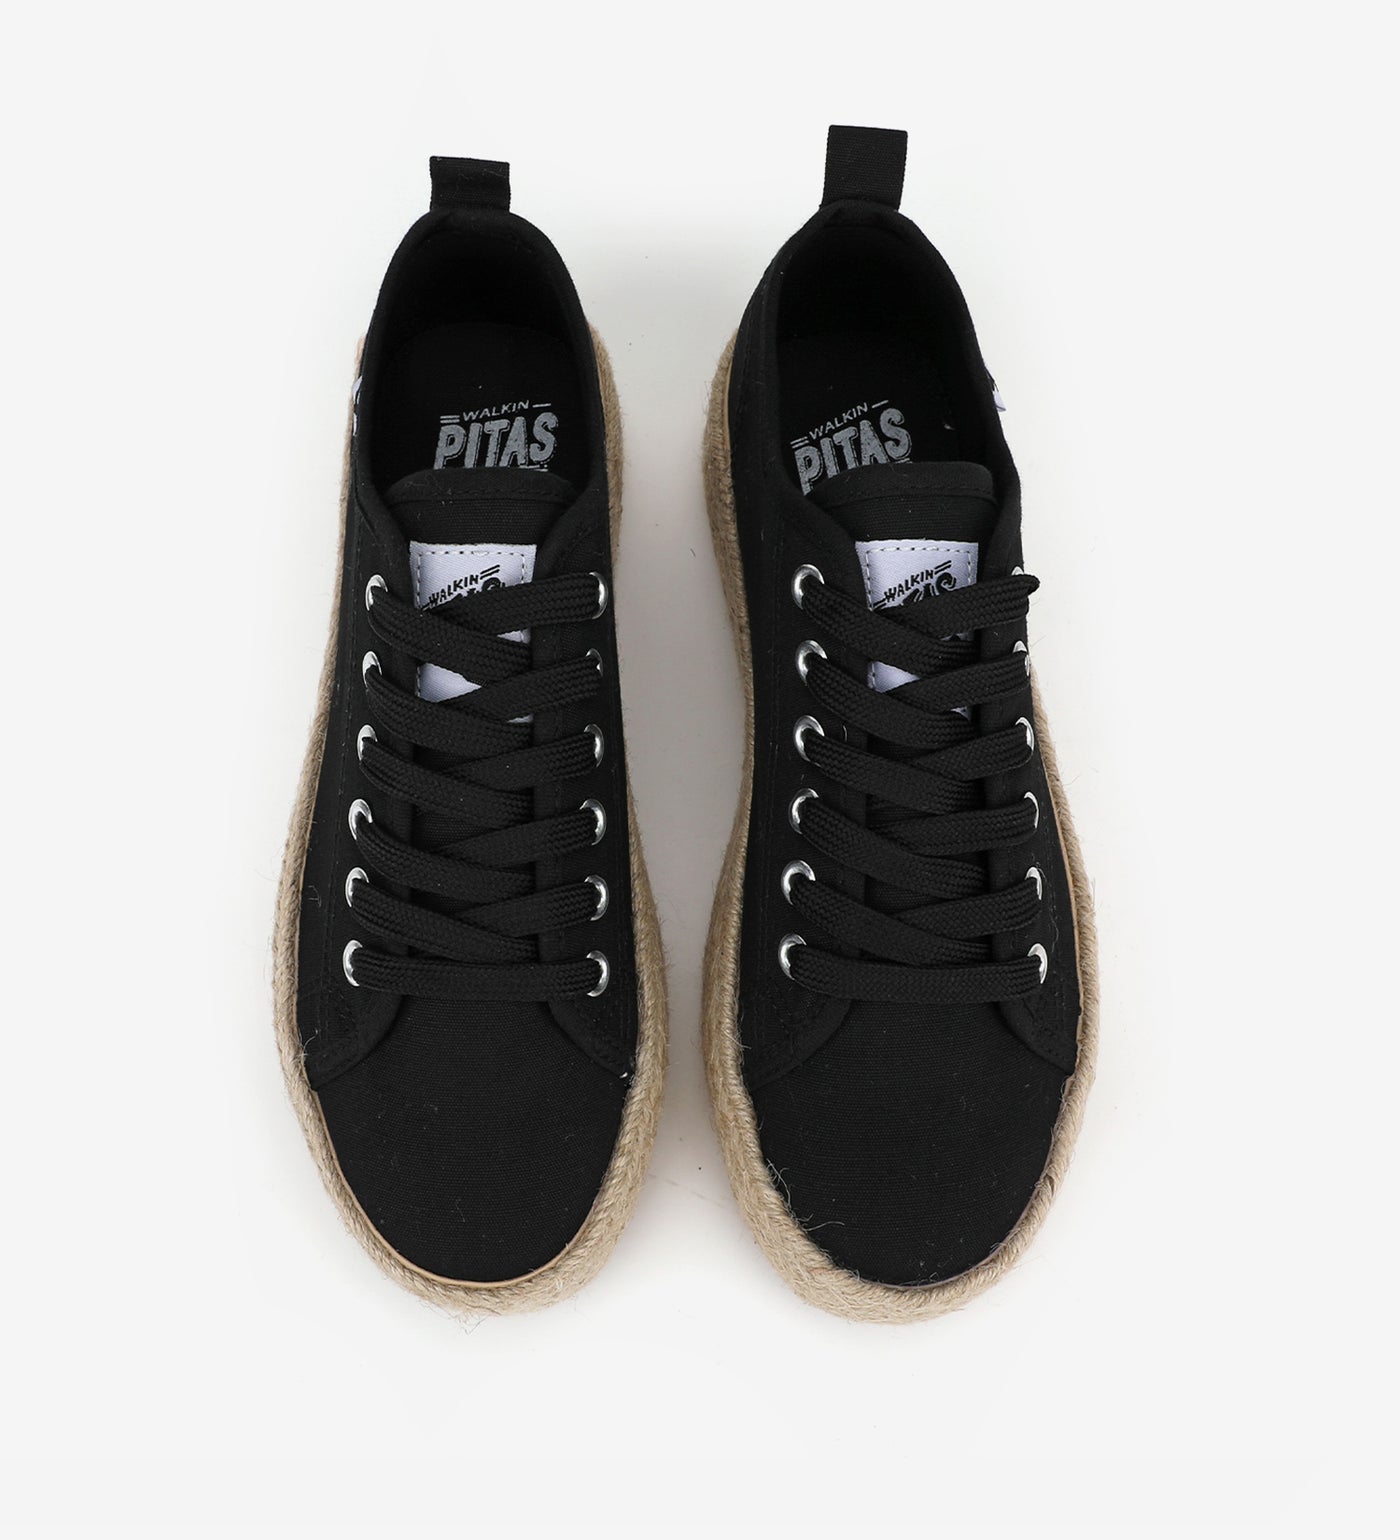 Pitas lace-up 4cm platform espadrille sneakers